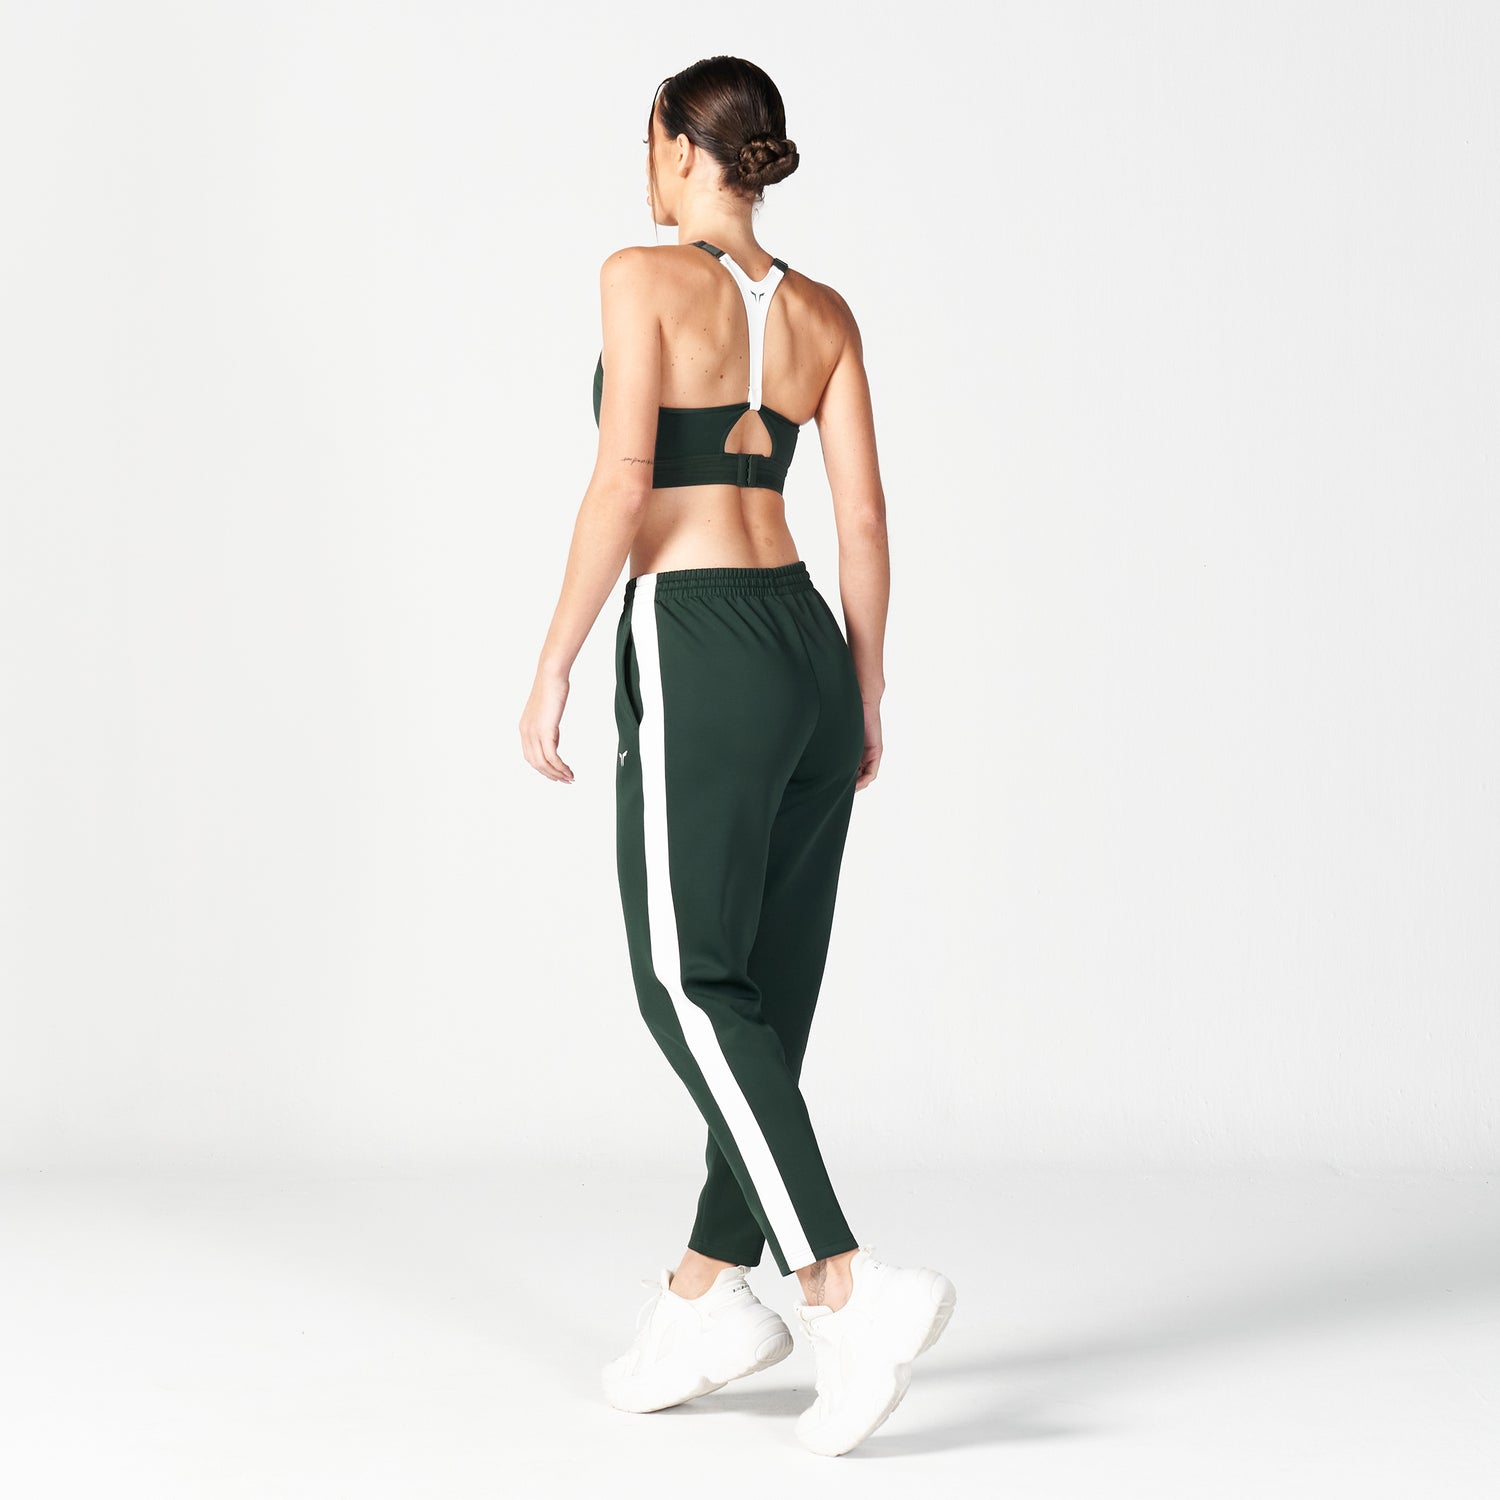 Buy StyFun Sports Bra for Women Combo Pack Gym Yoga Running